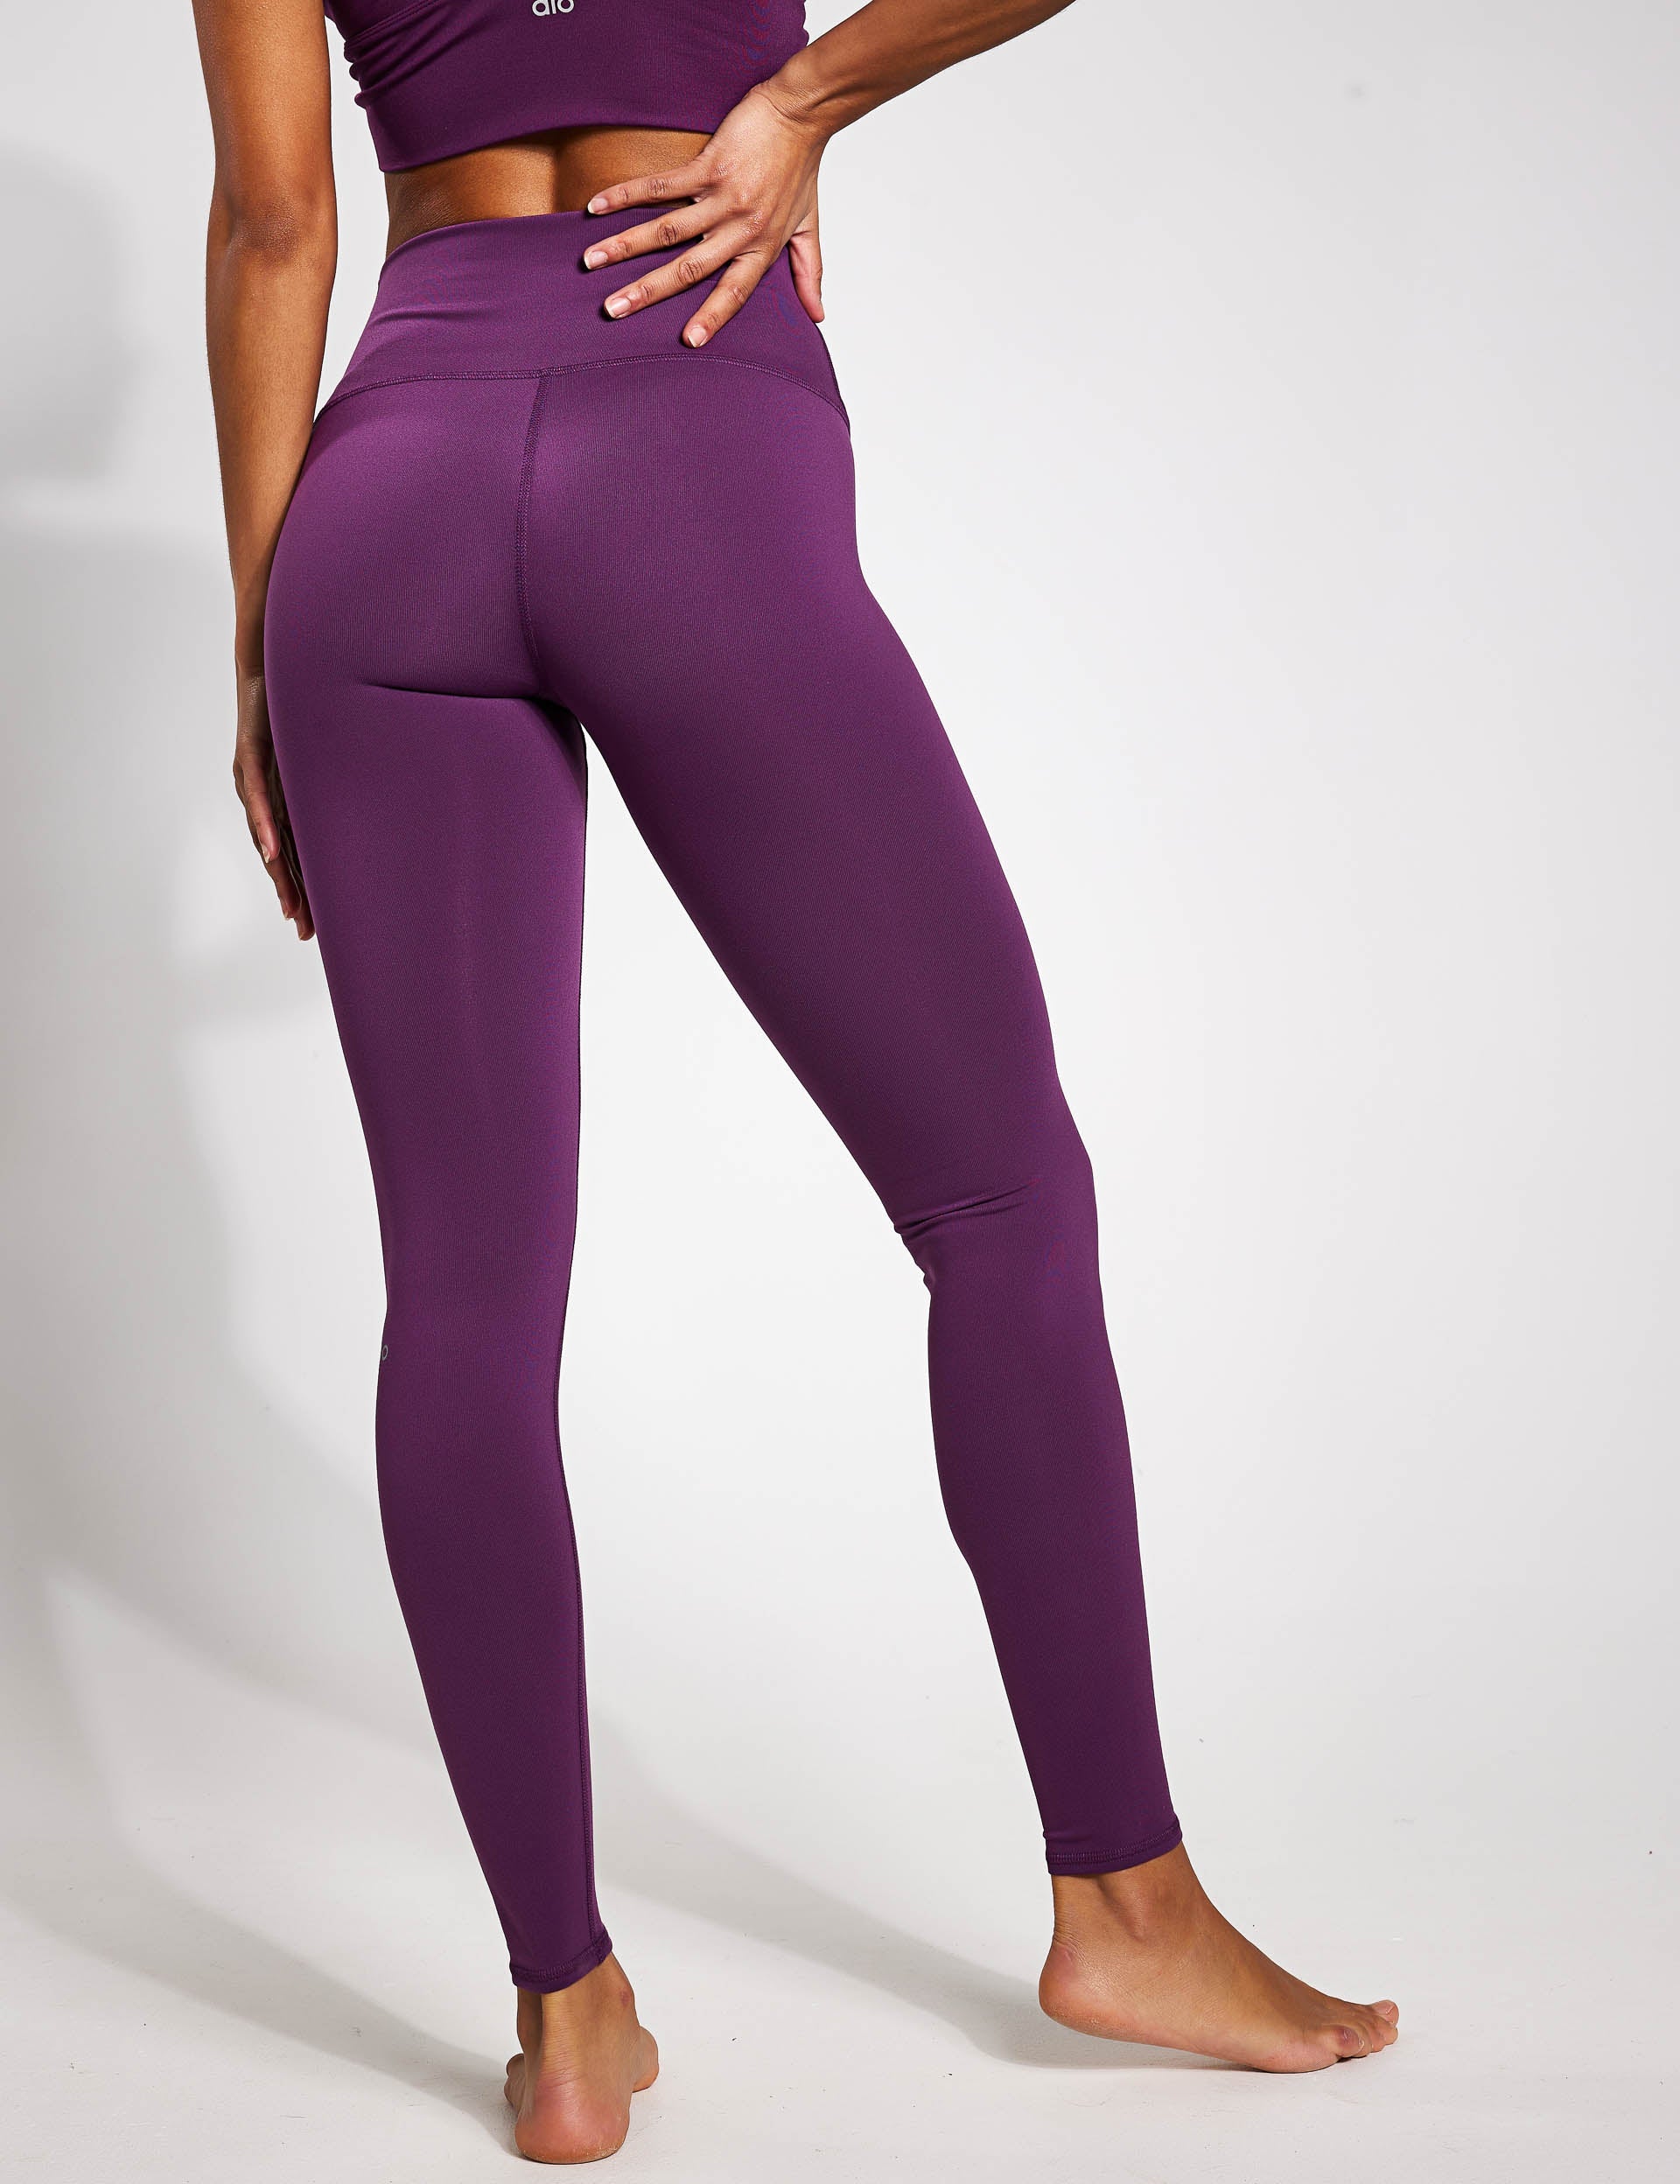 Champion Women's Authentic Athleticwear Legging Dark Berry Purple